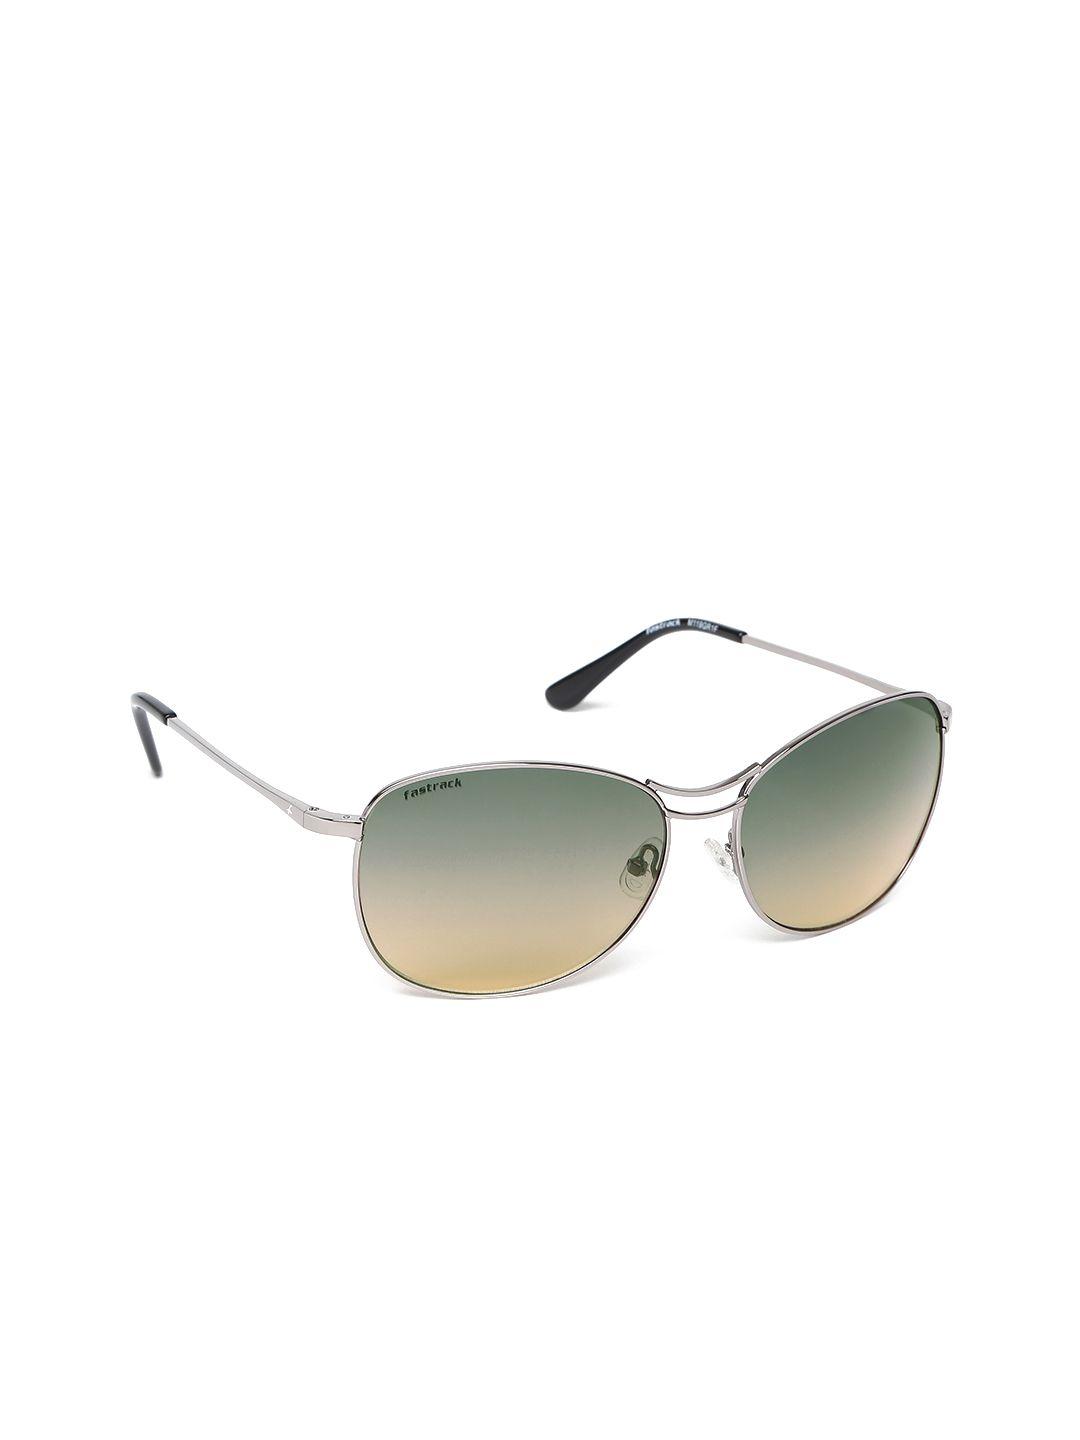 fastrack-women-two-toned-sunglasses-m119gr1f